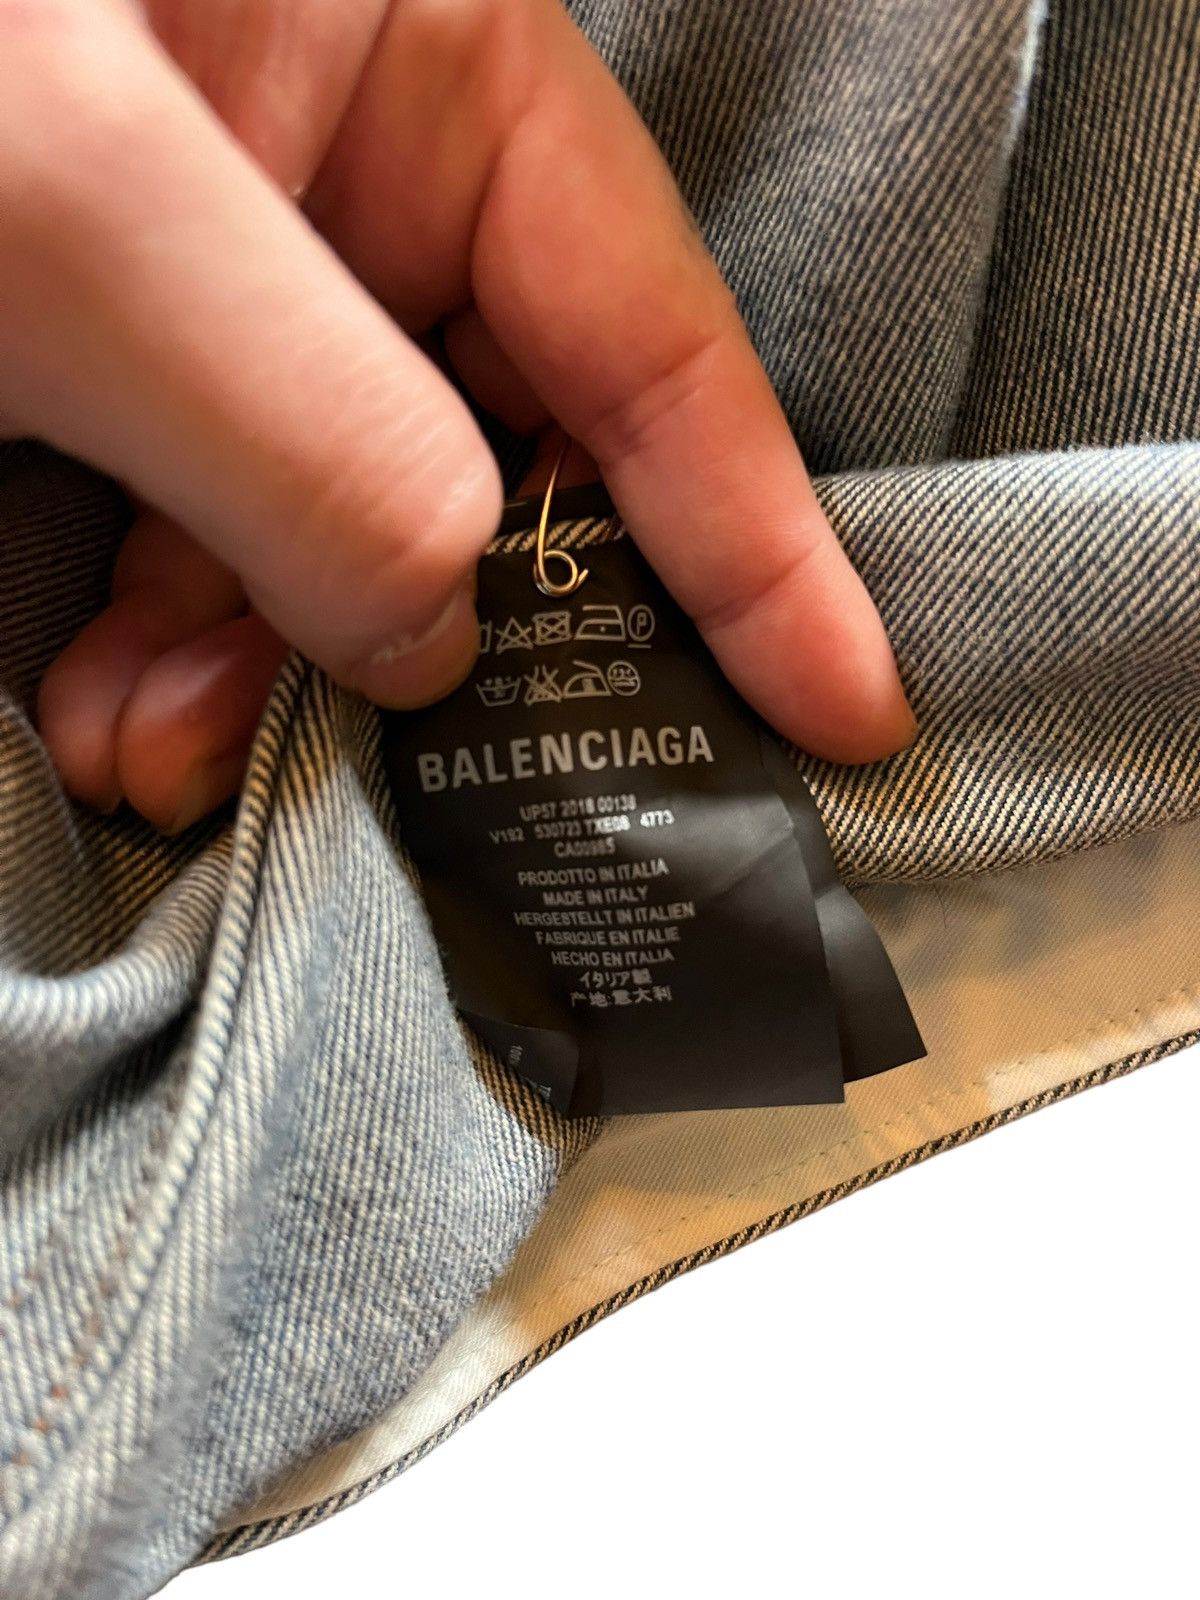 Balenciaga Balenciaga 2019 Graffti Denim Jacket Size US XL / EU 56 / 4 - 4 Thumbnail